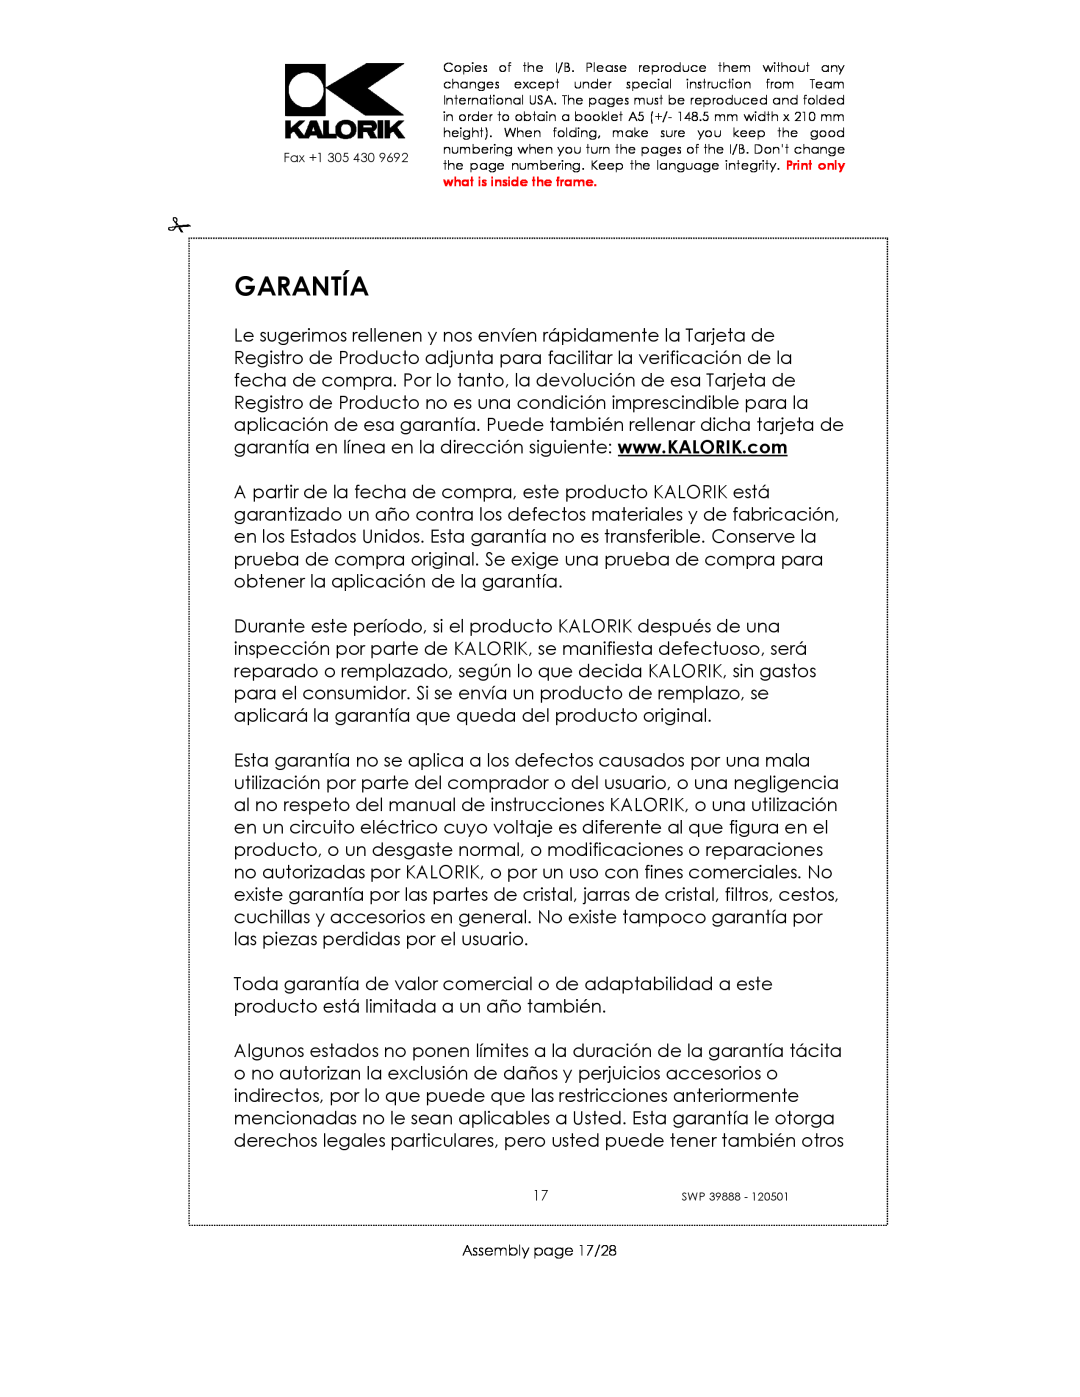 Kalorik SWP 39888 manual Garantía, Assembly page 17/28 